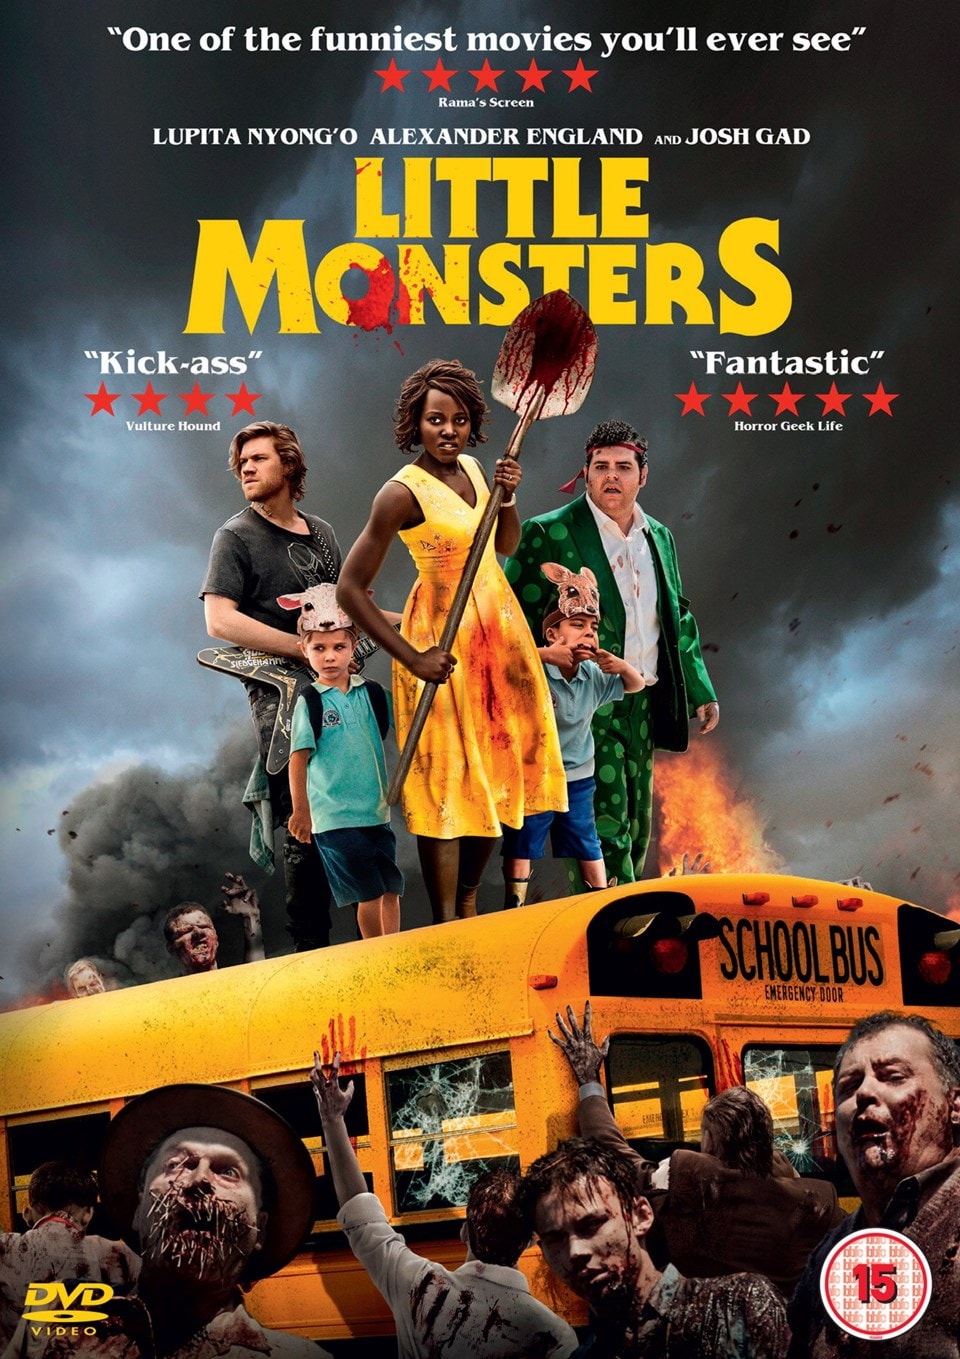 Little Monsters | DVD | Free shipping over £20 | HMV Store